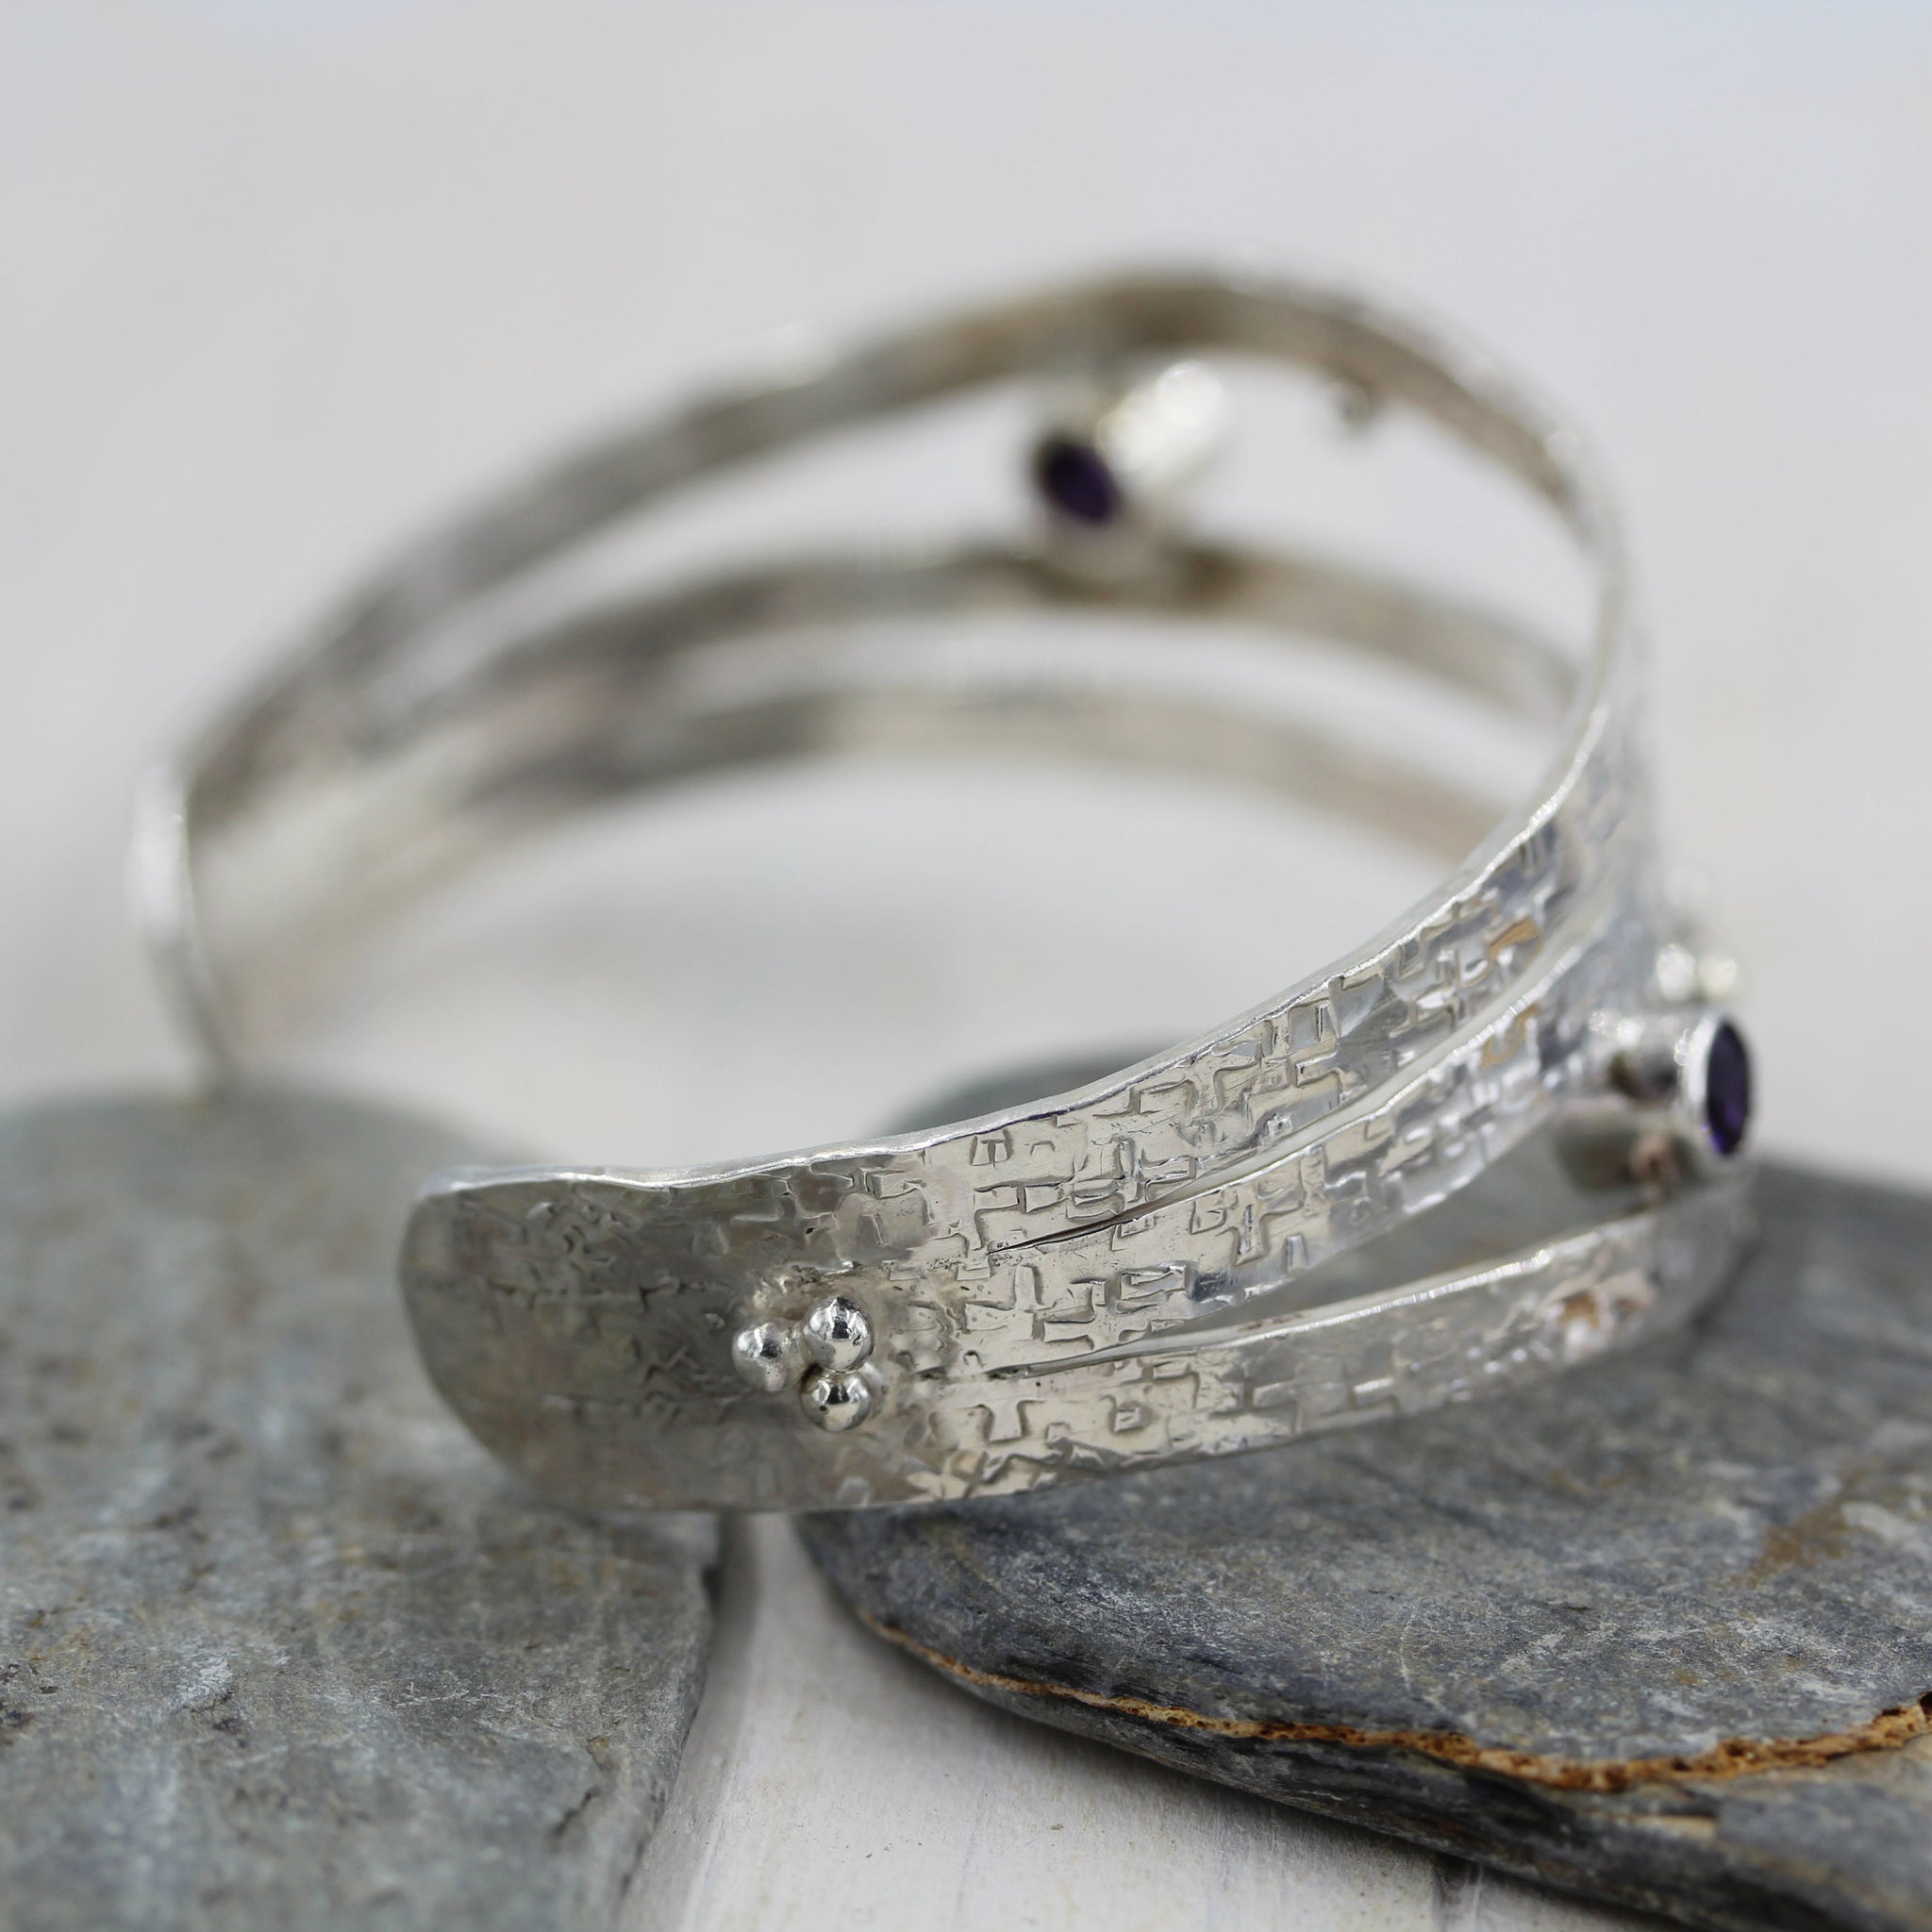 Handmade sterling silver  and amethyst sea inspired Cuff Bracelet by Gemma Tremayne Jewellery.